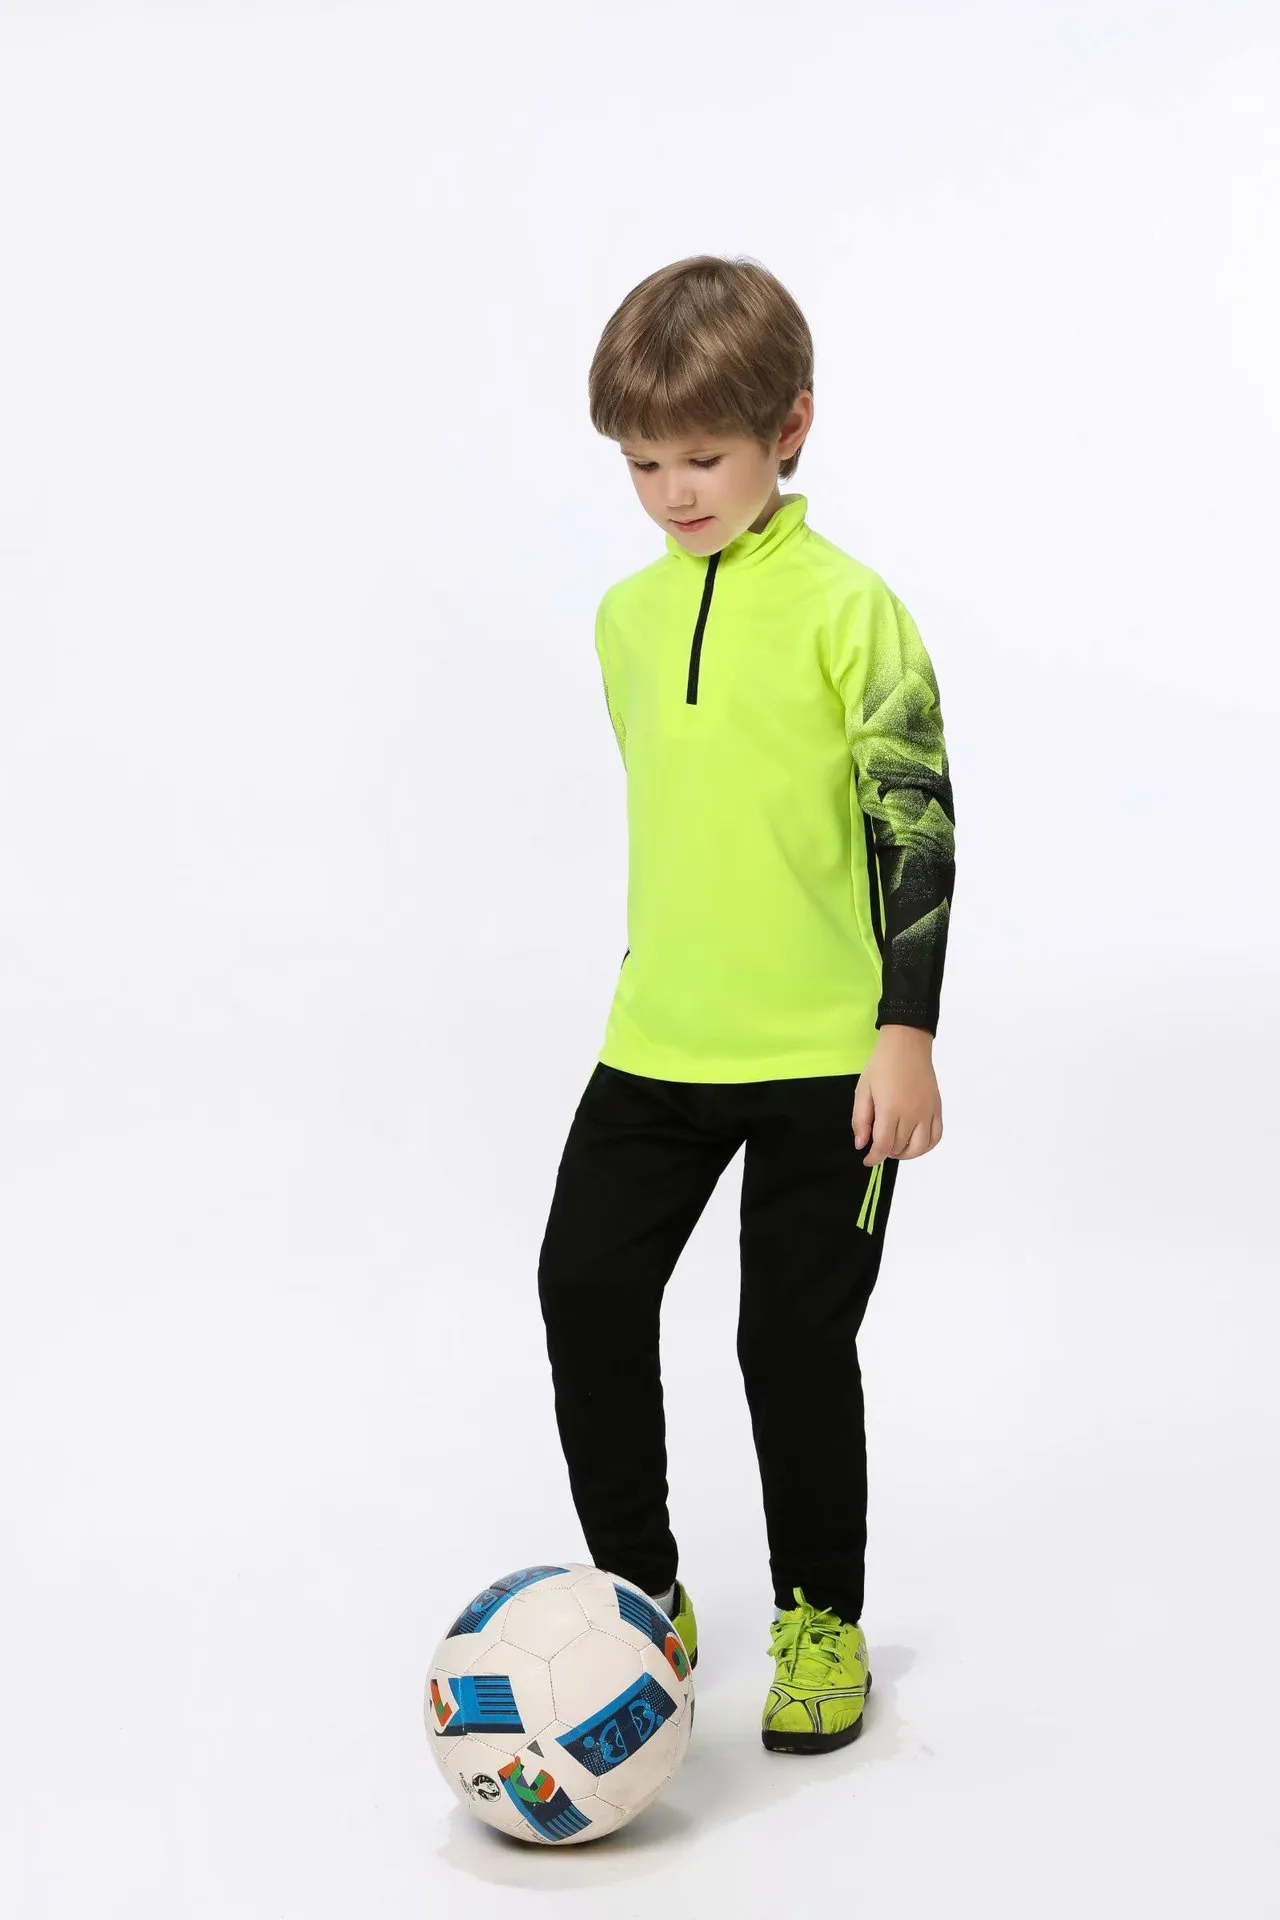 Jessie_kicks #HD61 Oweens 디자인 패션 유니폼 어린이 의류 Ourtdoor Sport 지원 QC 사진 배송 전